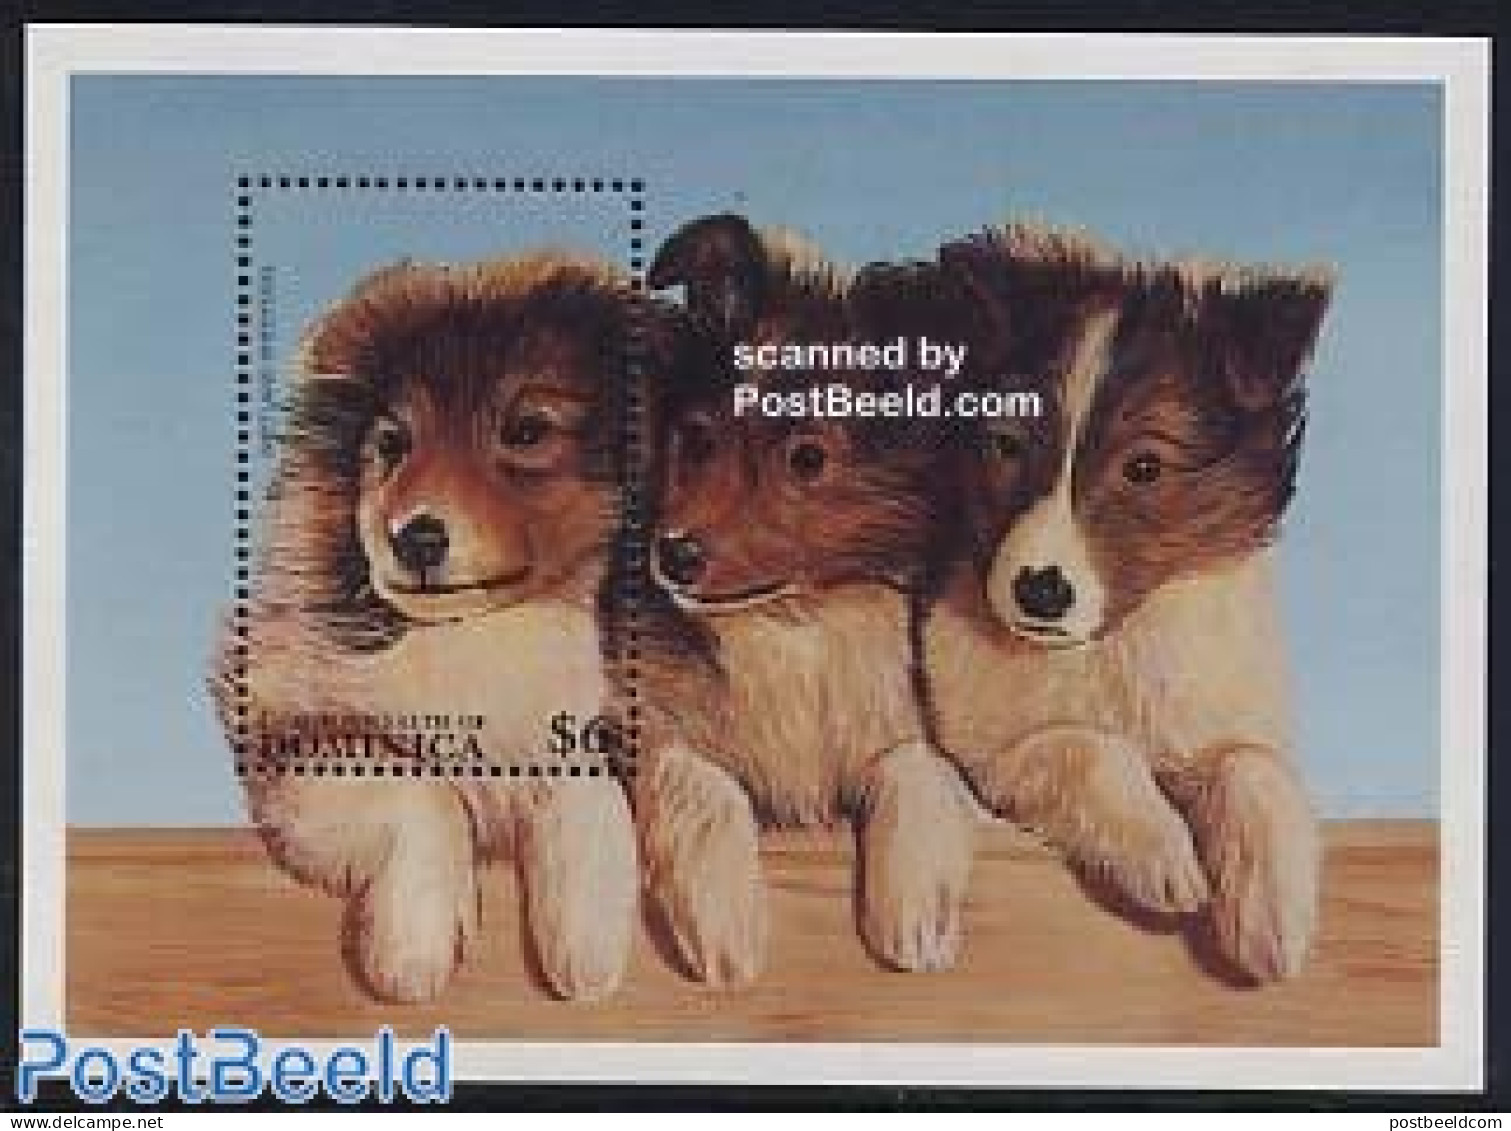 Dominica 1997 Shetland Sheepdog S/s, Mint NH, Nature - Dogs - Dominikanische Rep.